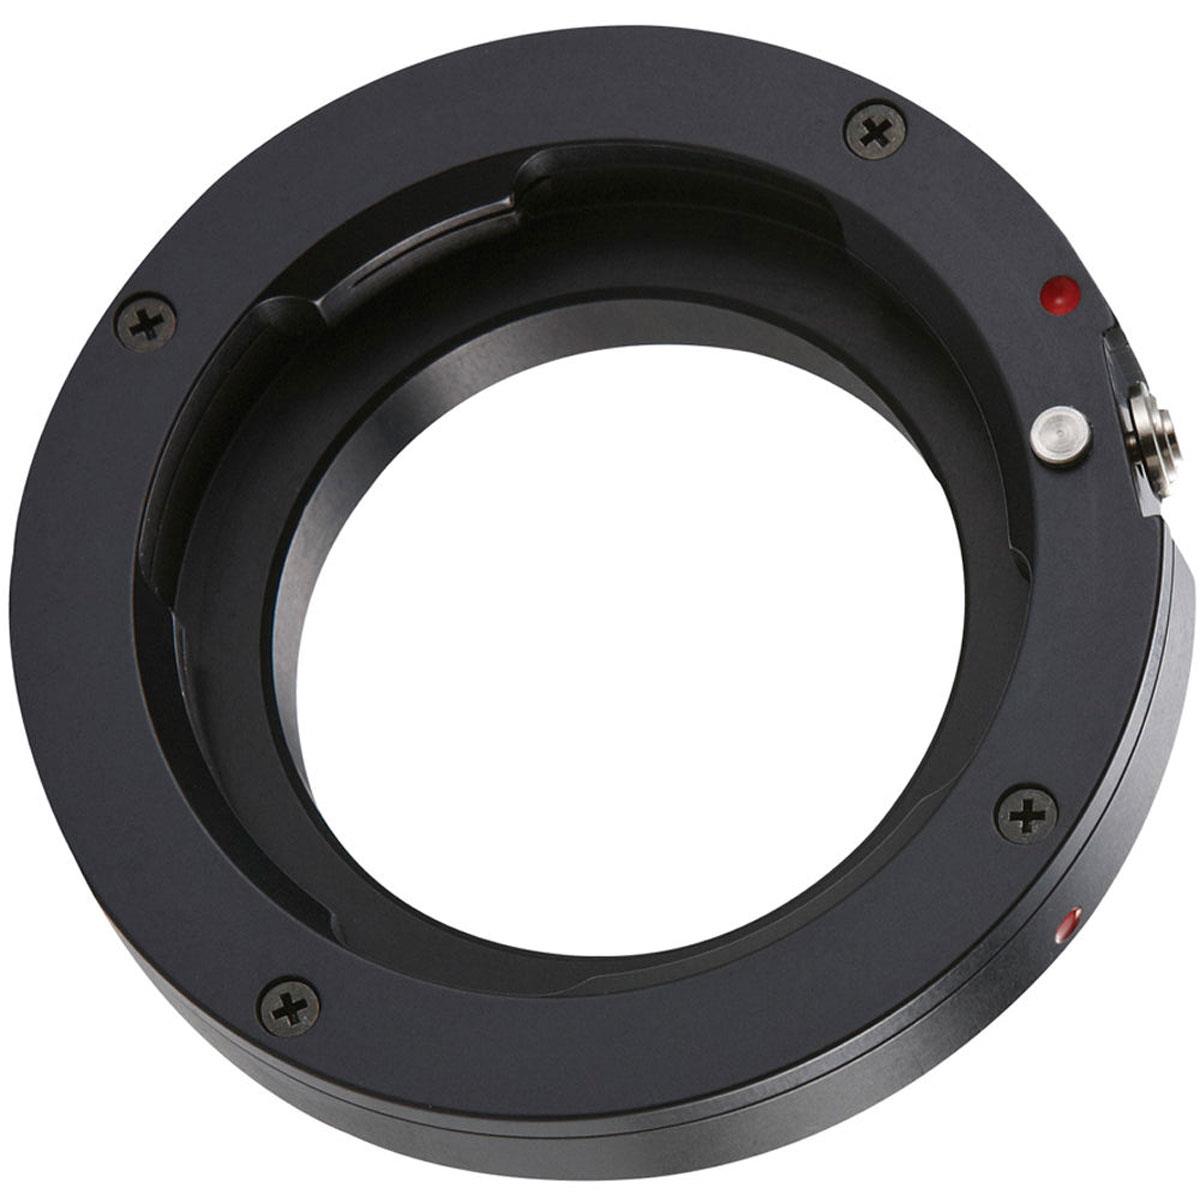 Image of Novoflex Adapter for Nikon Lenses to Nikon 1 Cameras